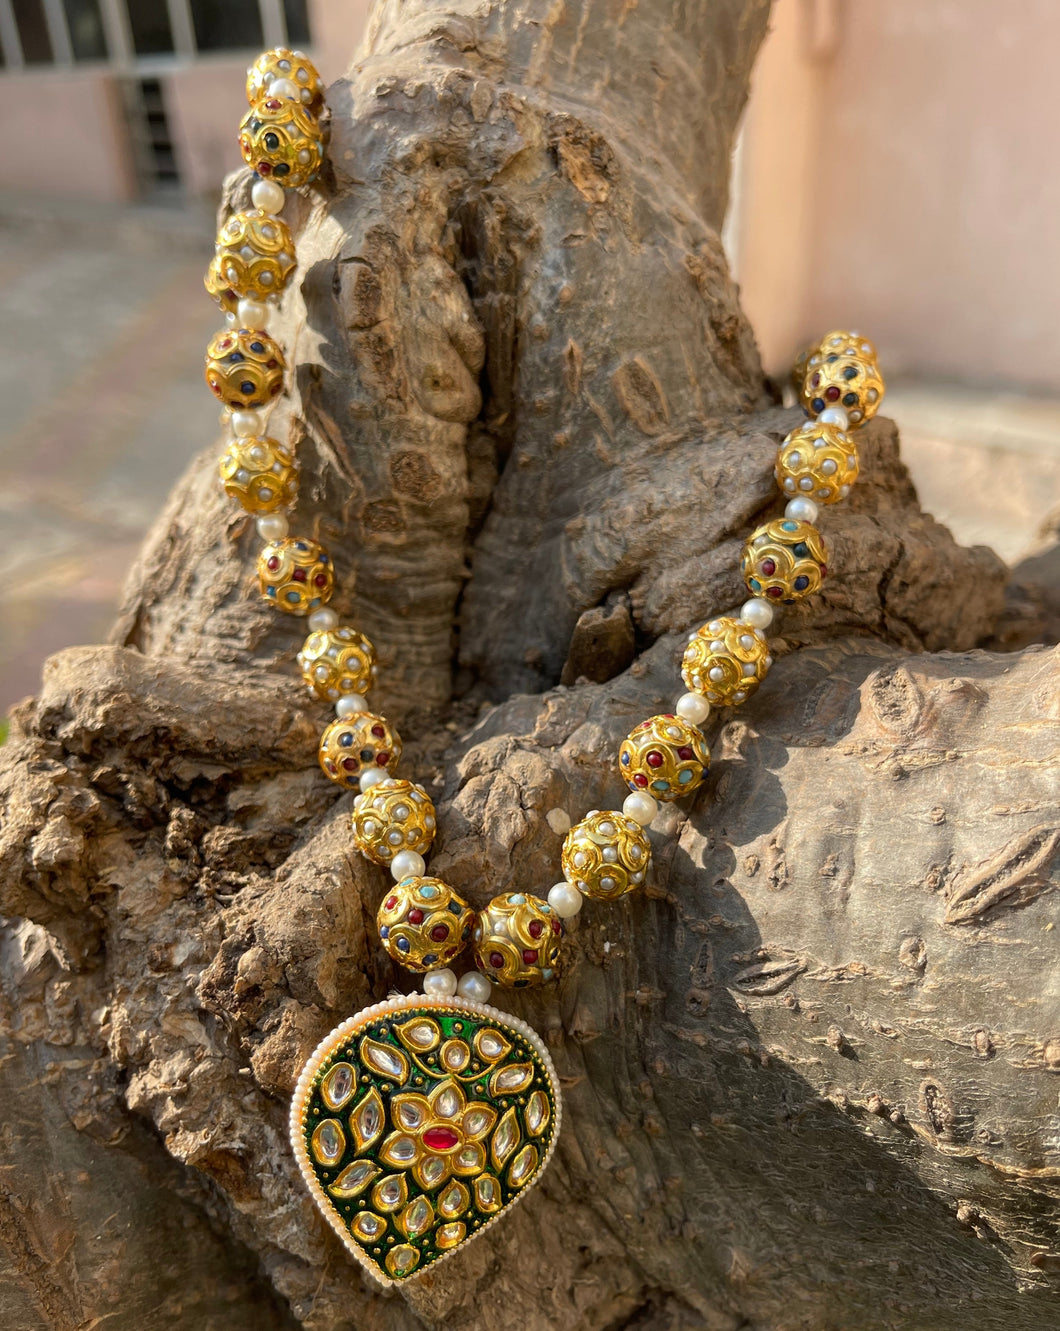 Long Kundan Necklace with Jadau Balls and Earrings